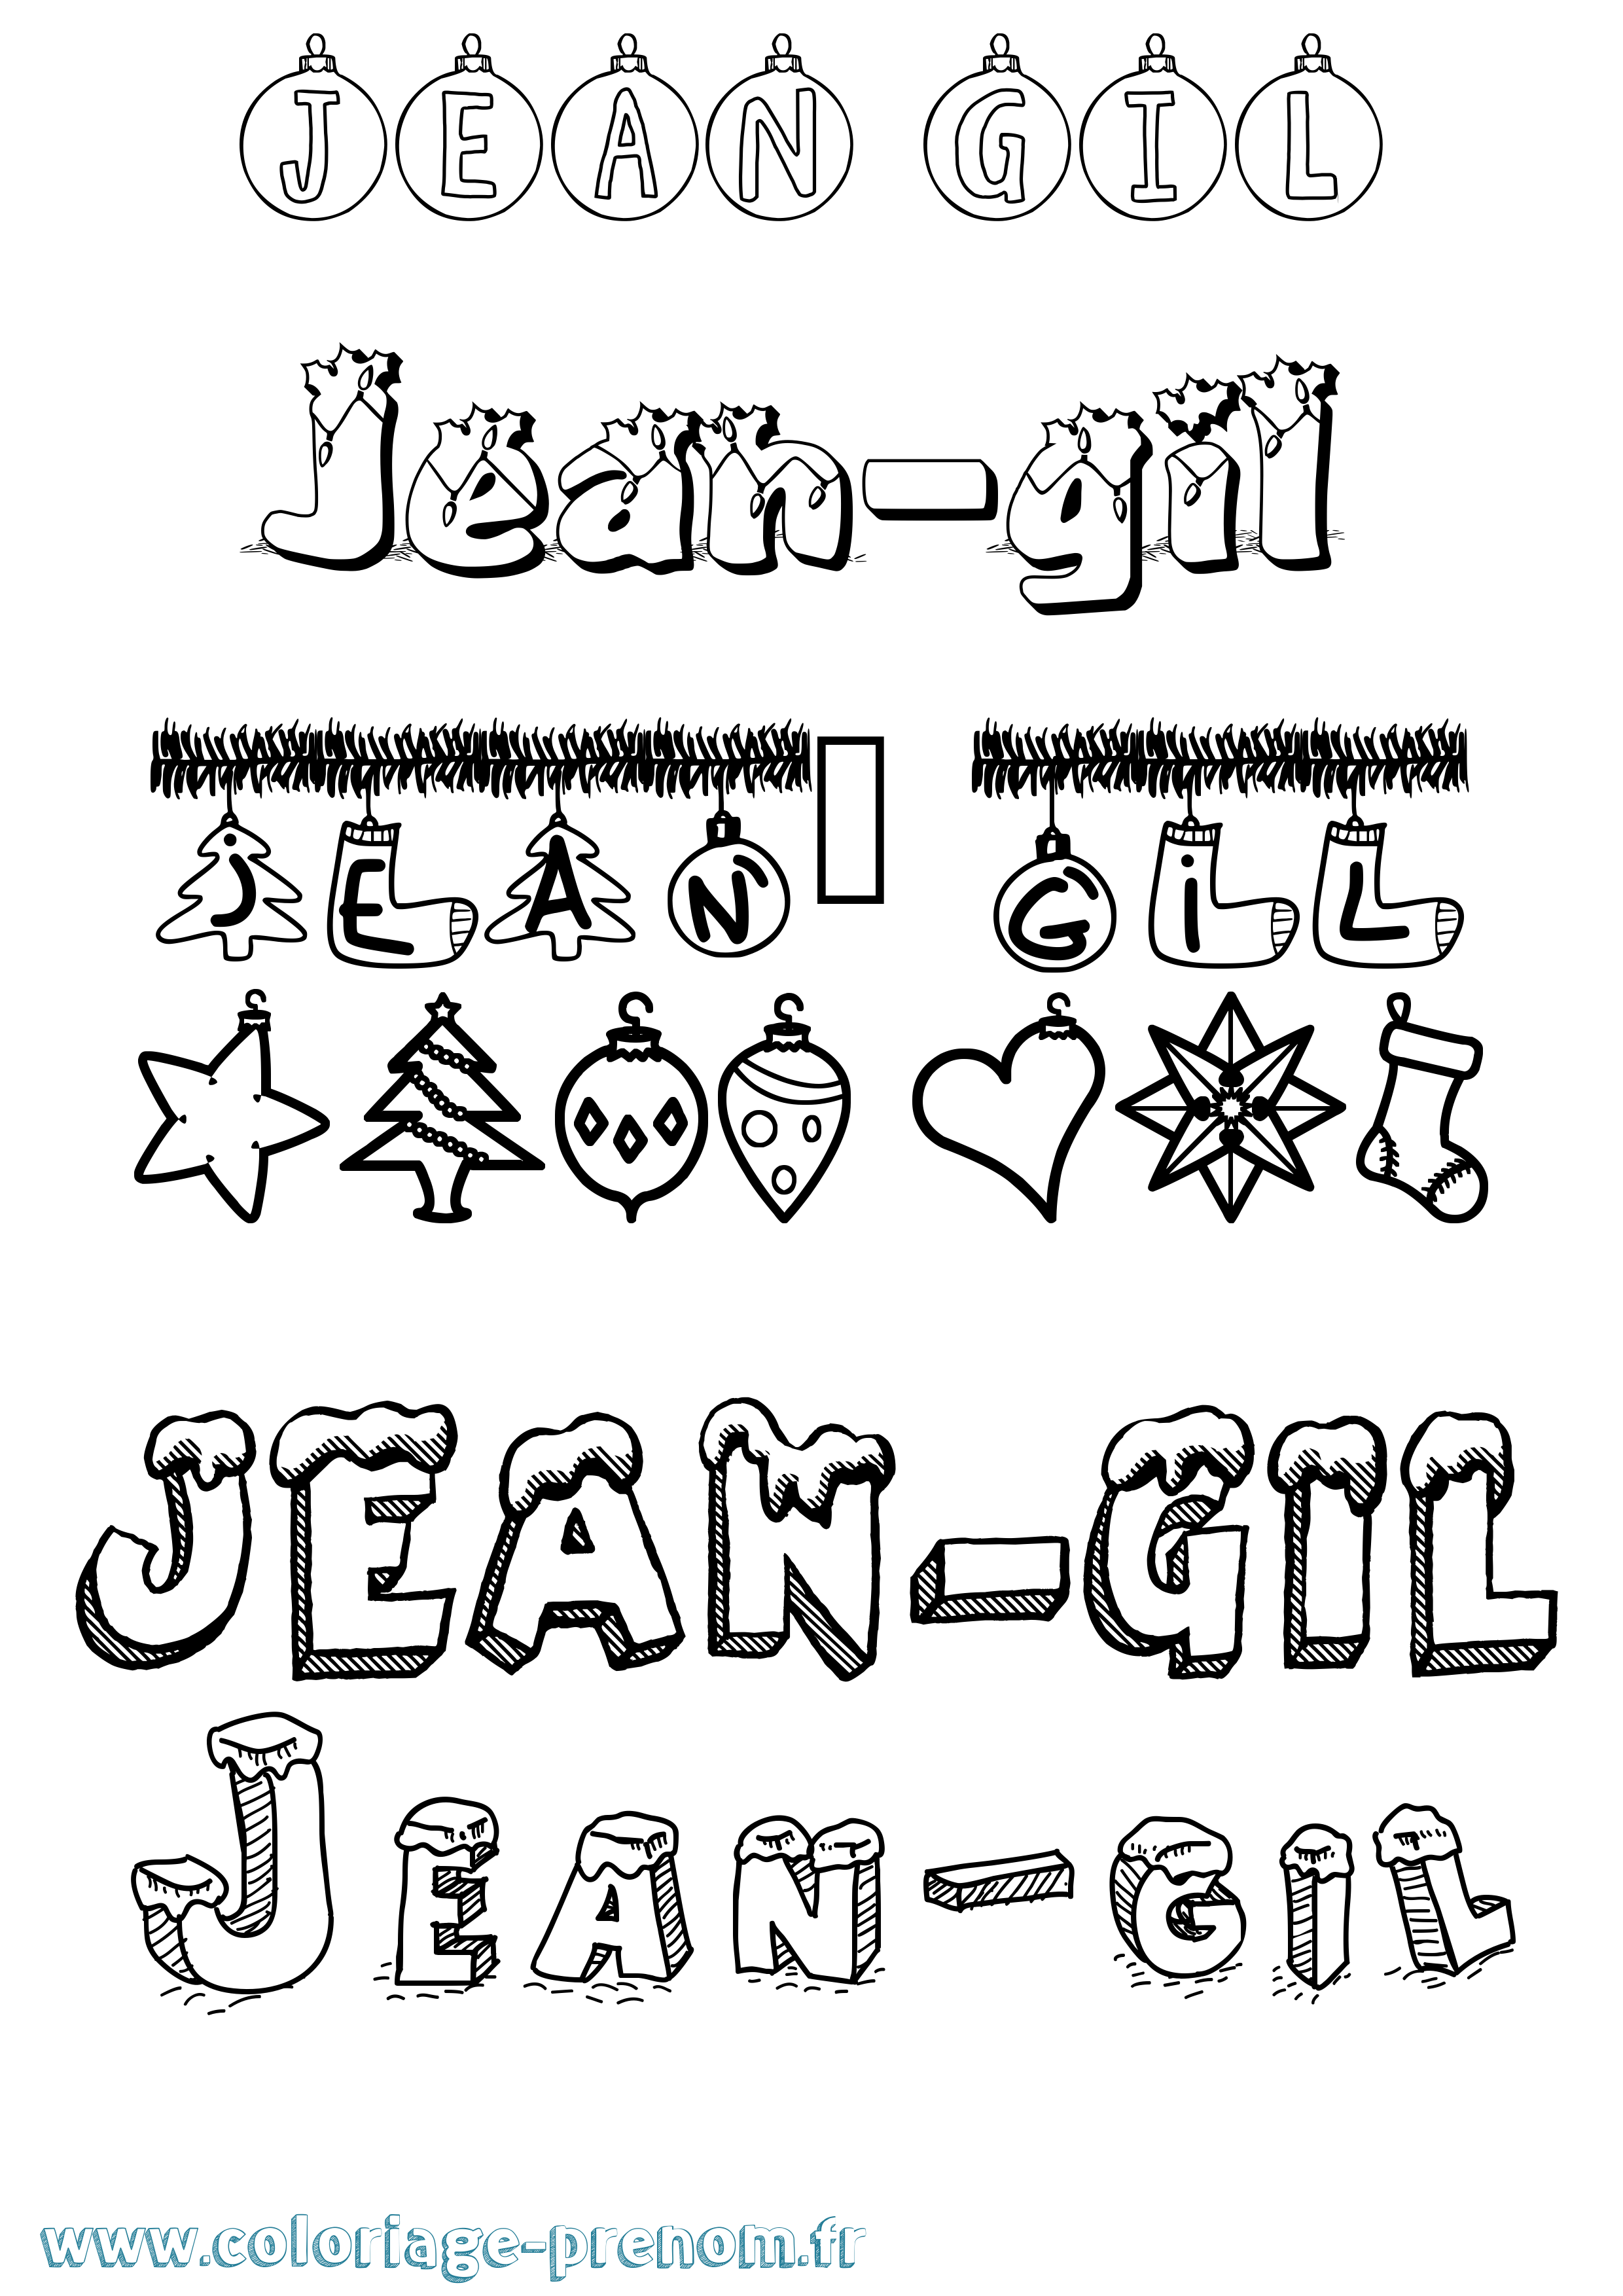 Coloriage prénom Jean-Gil Noël